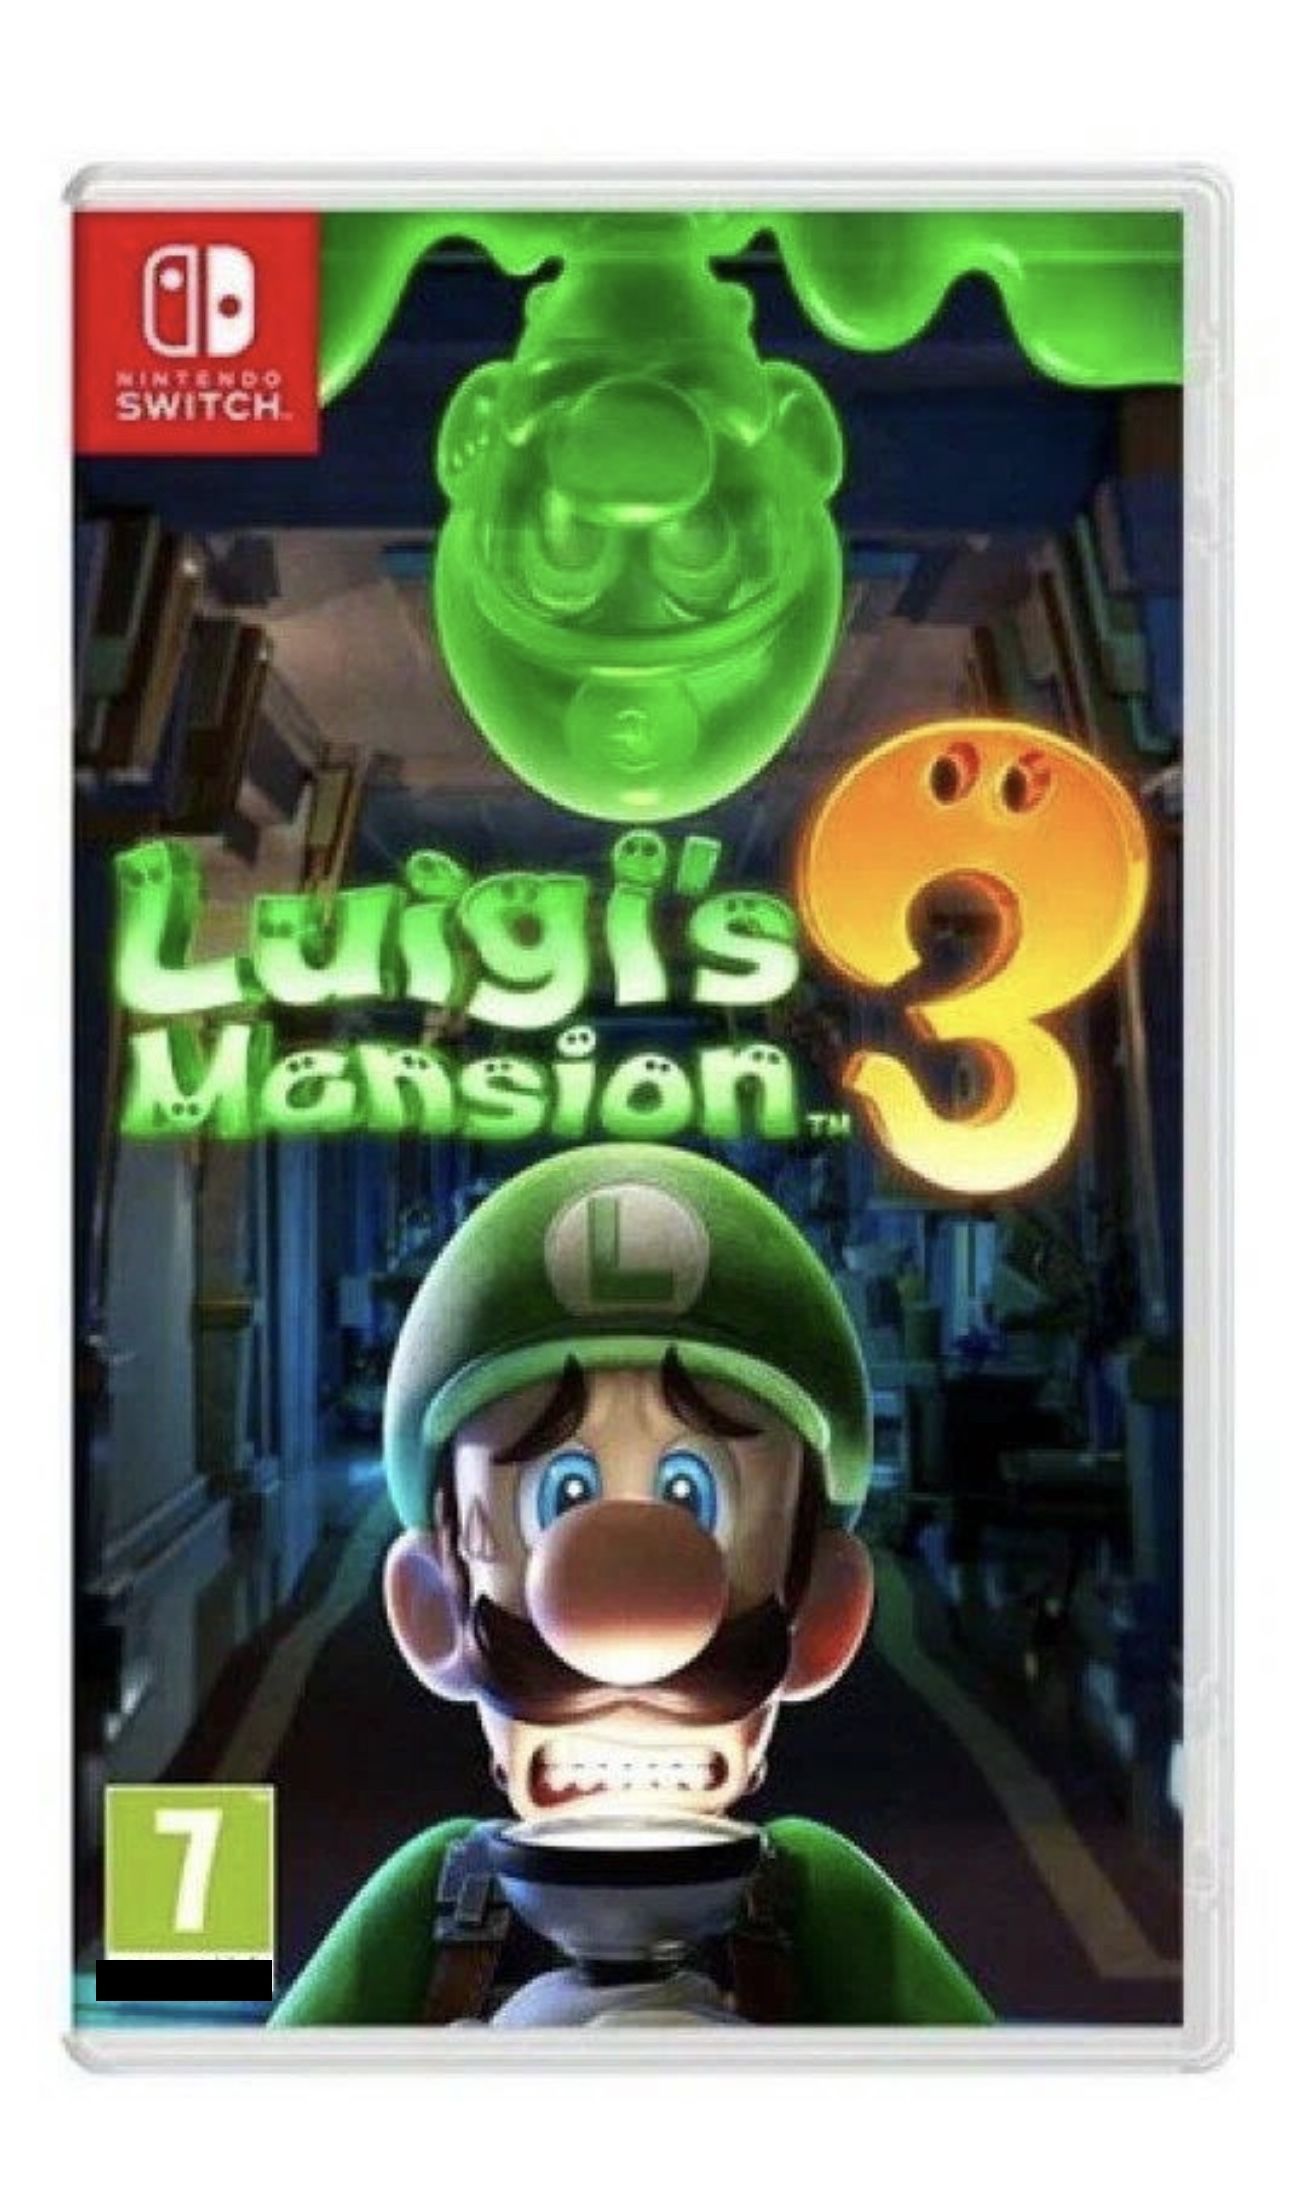 Luigi nintendo switch. Luigi's Mansion 3 Nintendo Switch. Luigi s Mansion Nintendo Switch. Игра Luigi's Mansion 3 (Nintendo Switch). Luigi's Mansion 3 Нинтендо свитч.